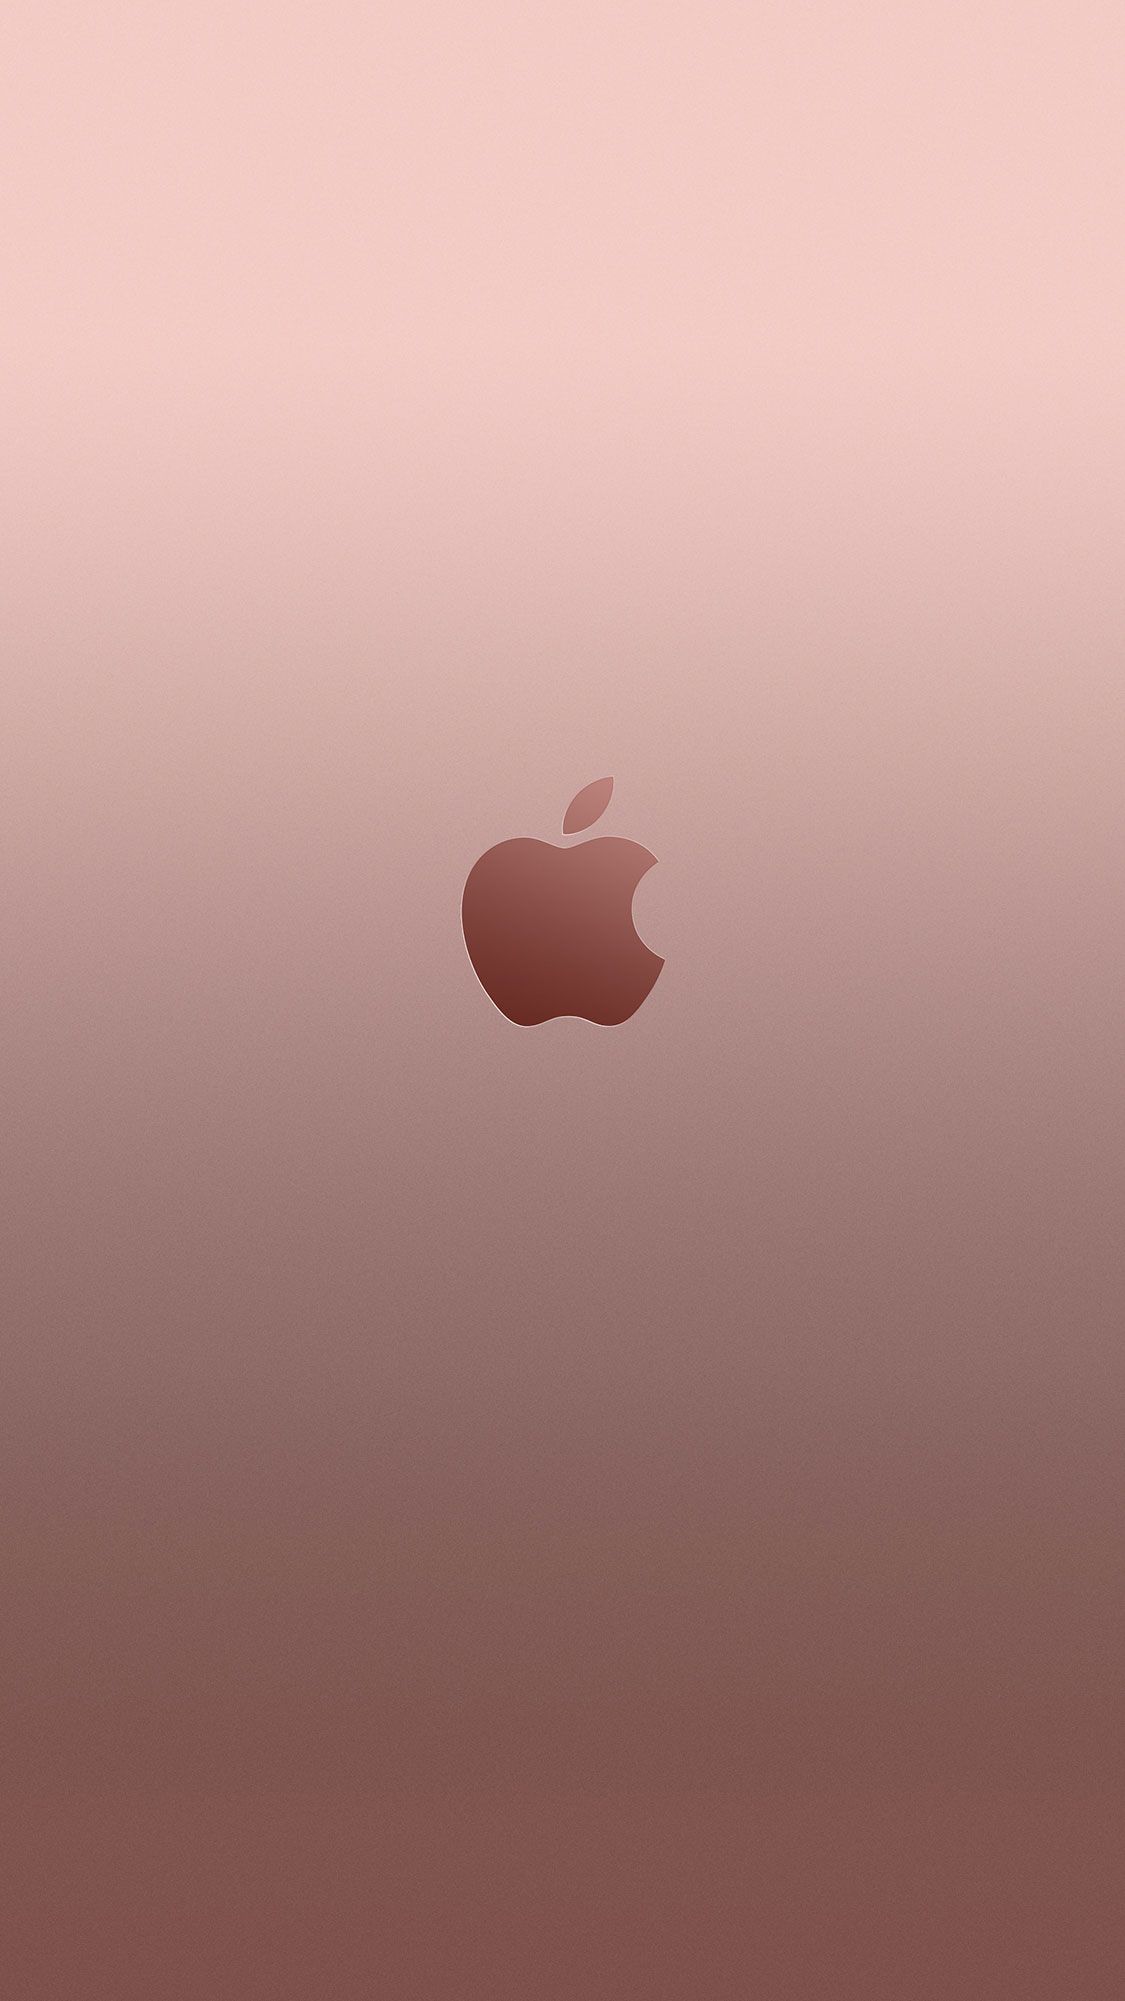 iphone 6s wallpaper tumblr,rosa,himmel,herz,illustration,ruhe